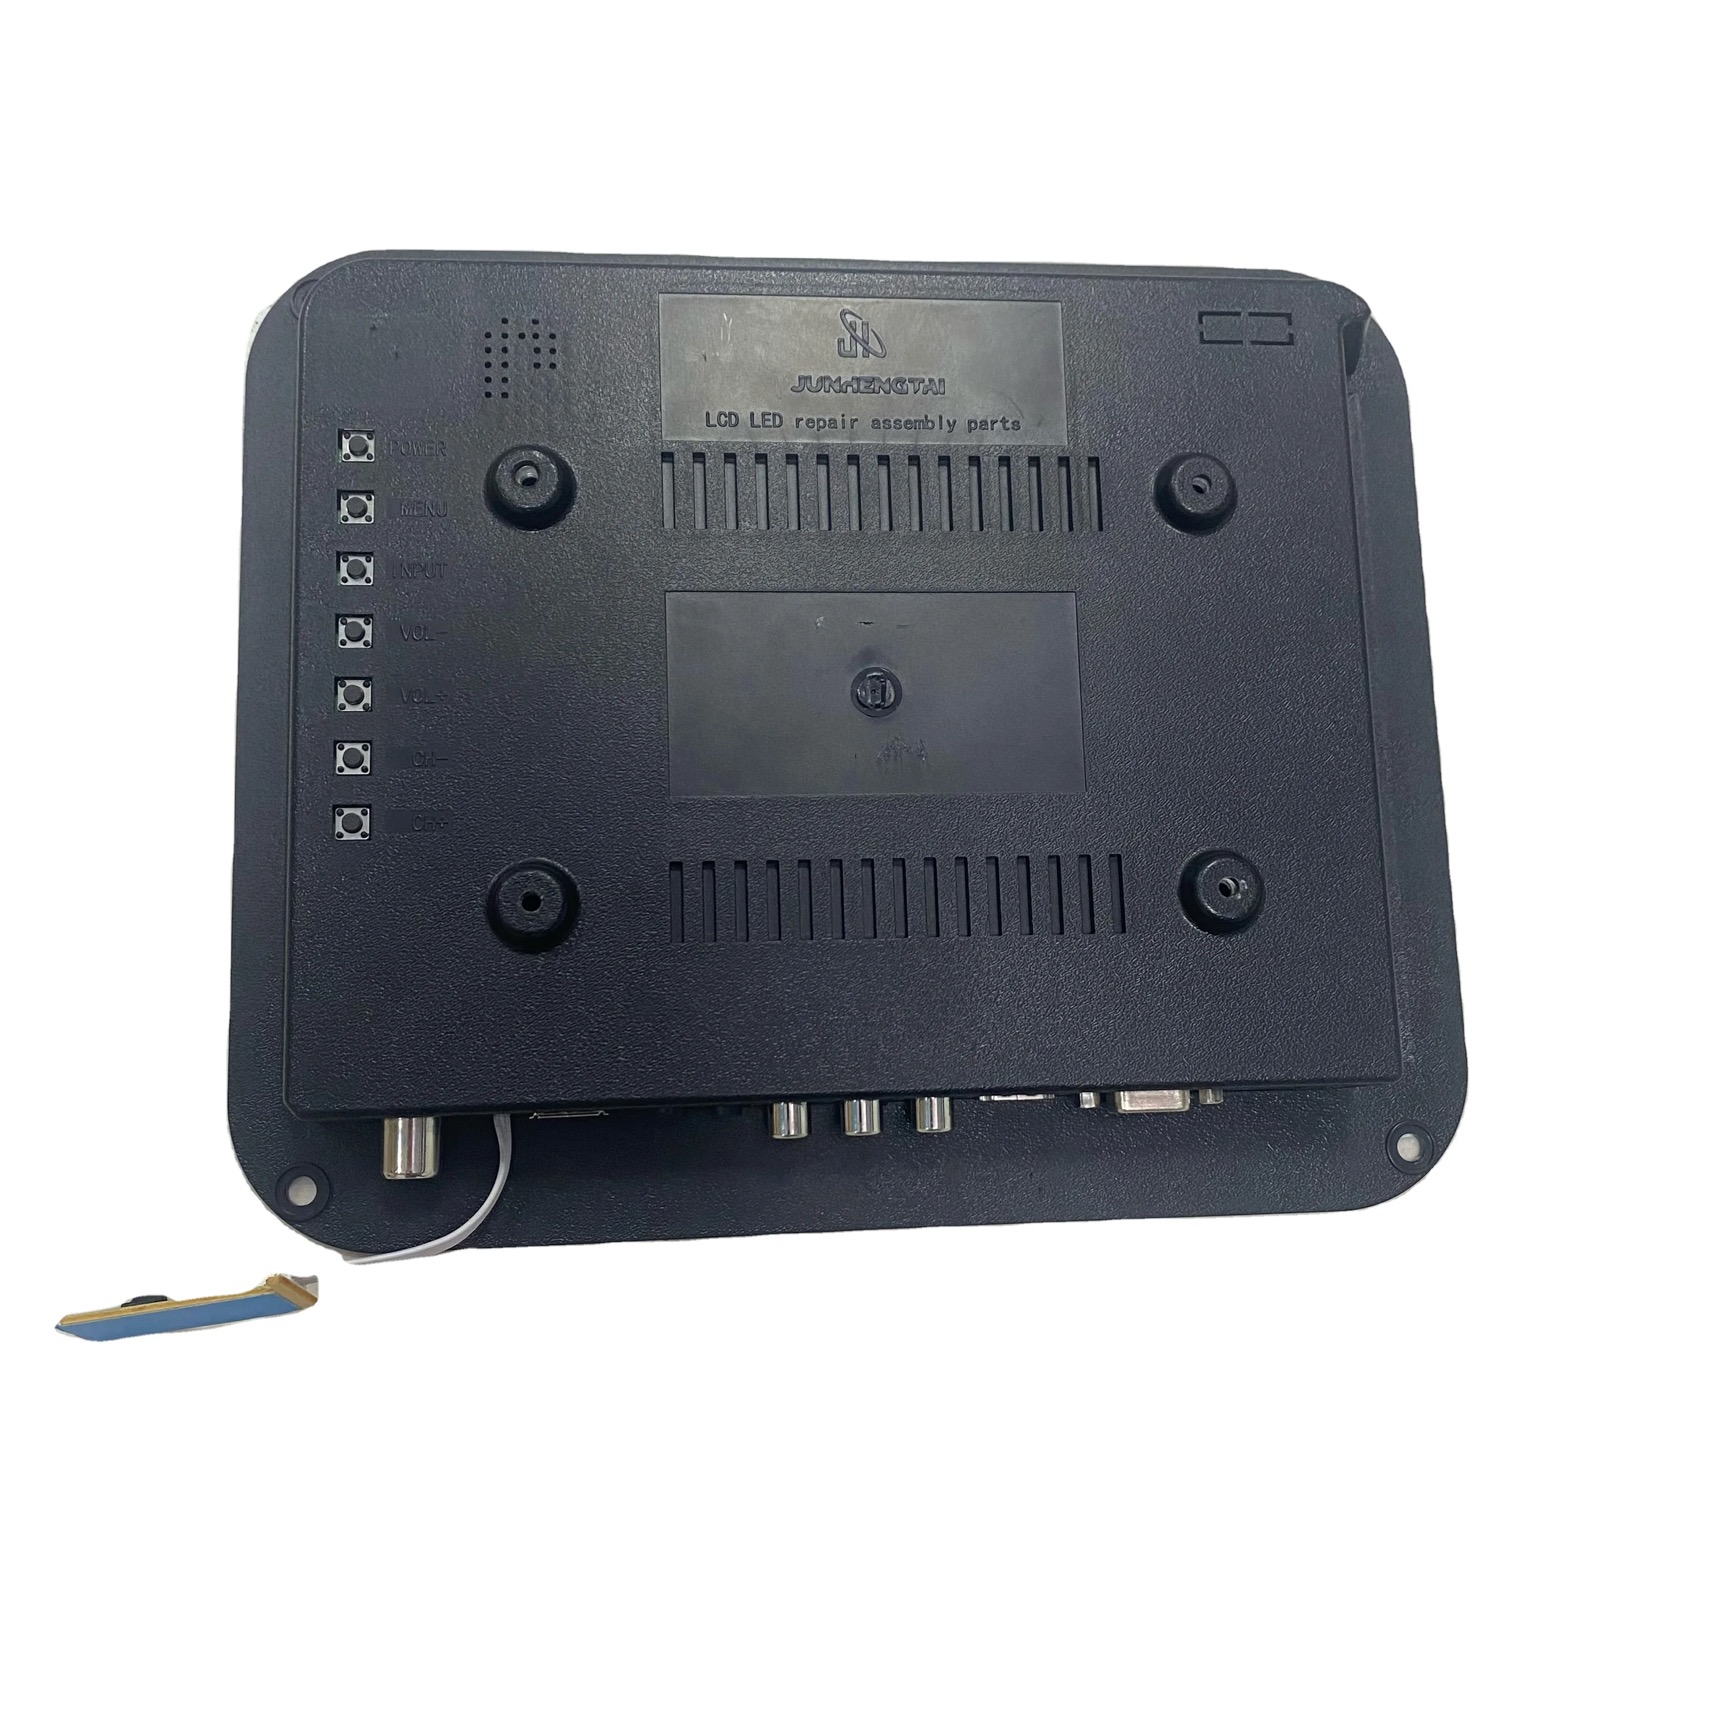 LED TV Repair kit universal 32inch factory hot sell models lcd tv repair package led tv pcb board case